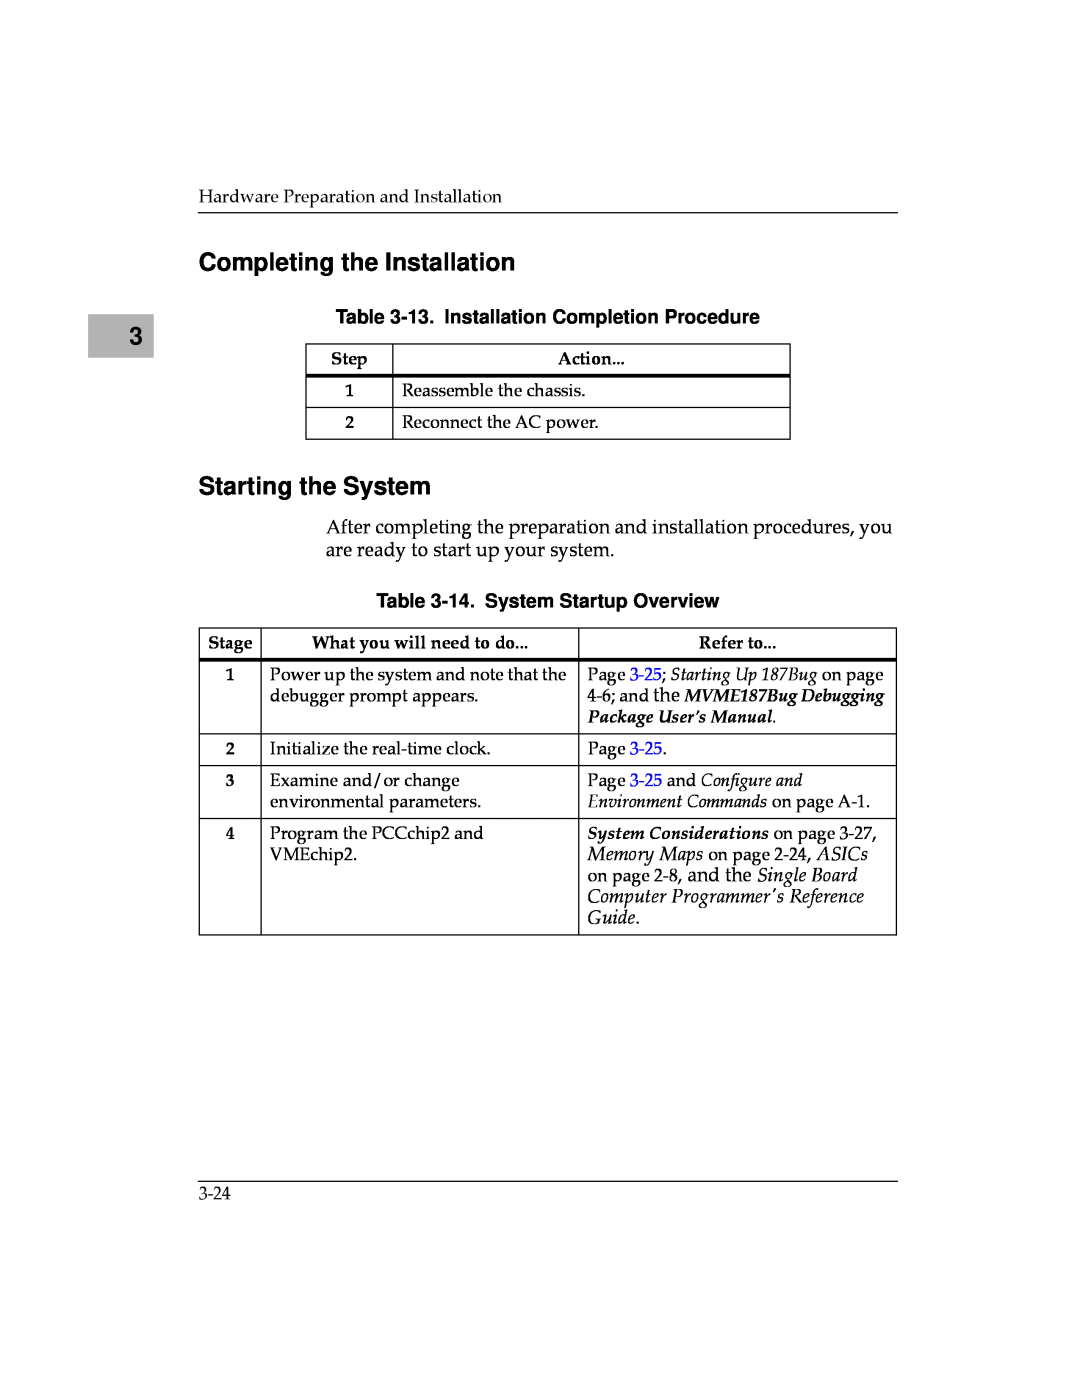 Motorola MVME187 manual Completing the Installation, Starting the System, 13. Installation Completion Procedure 